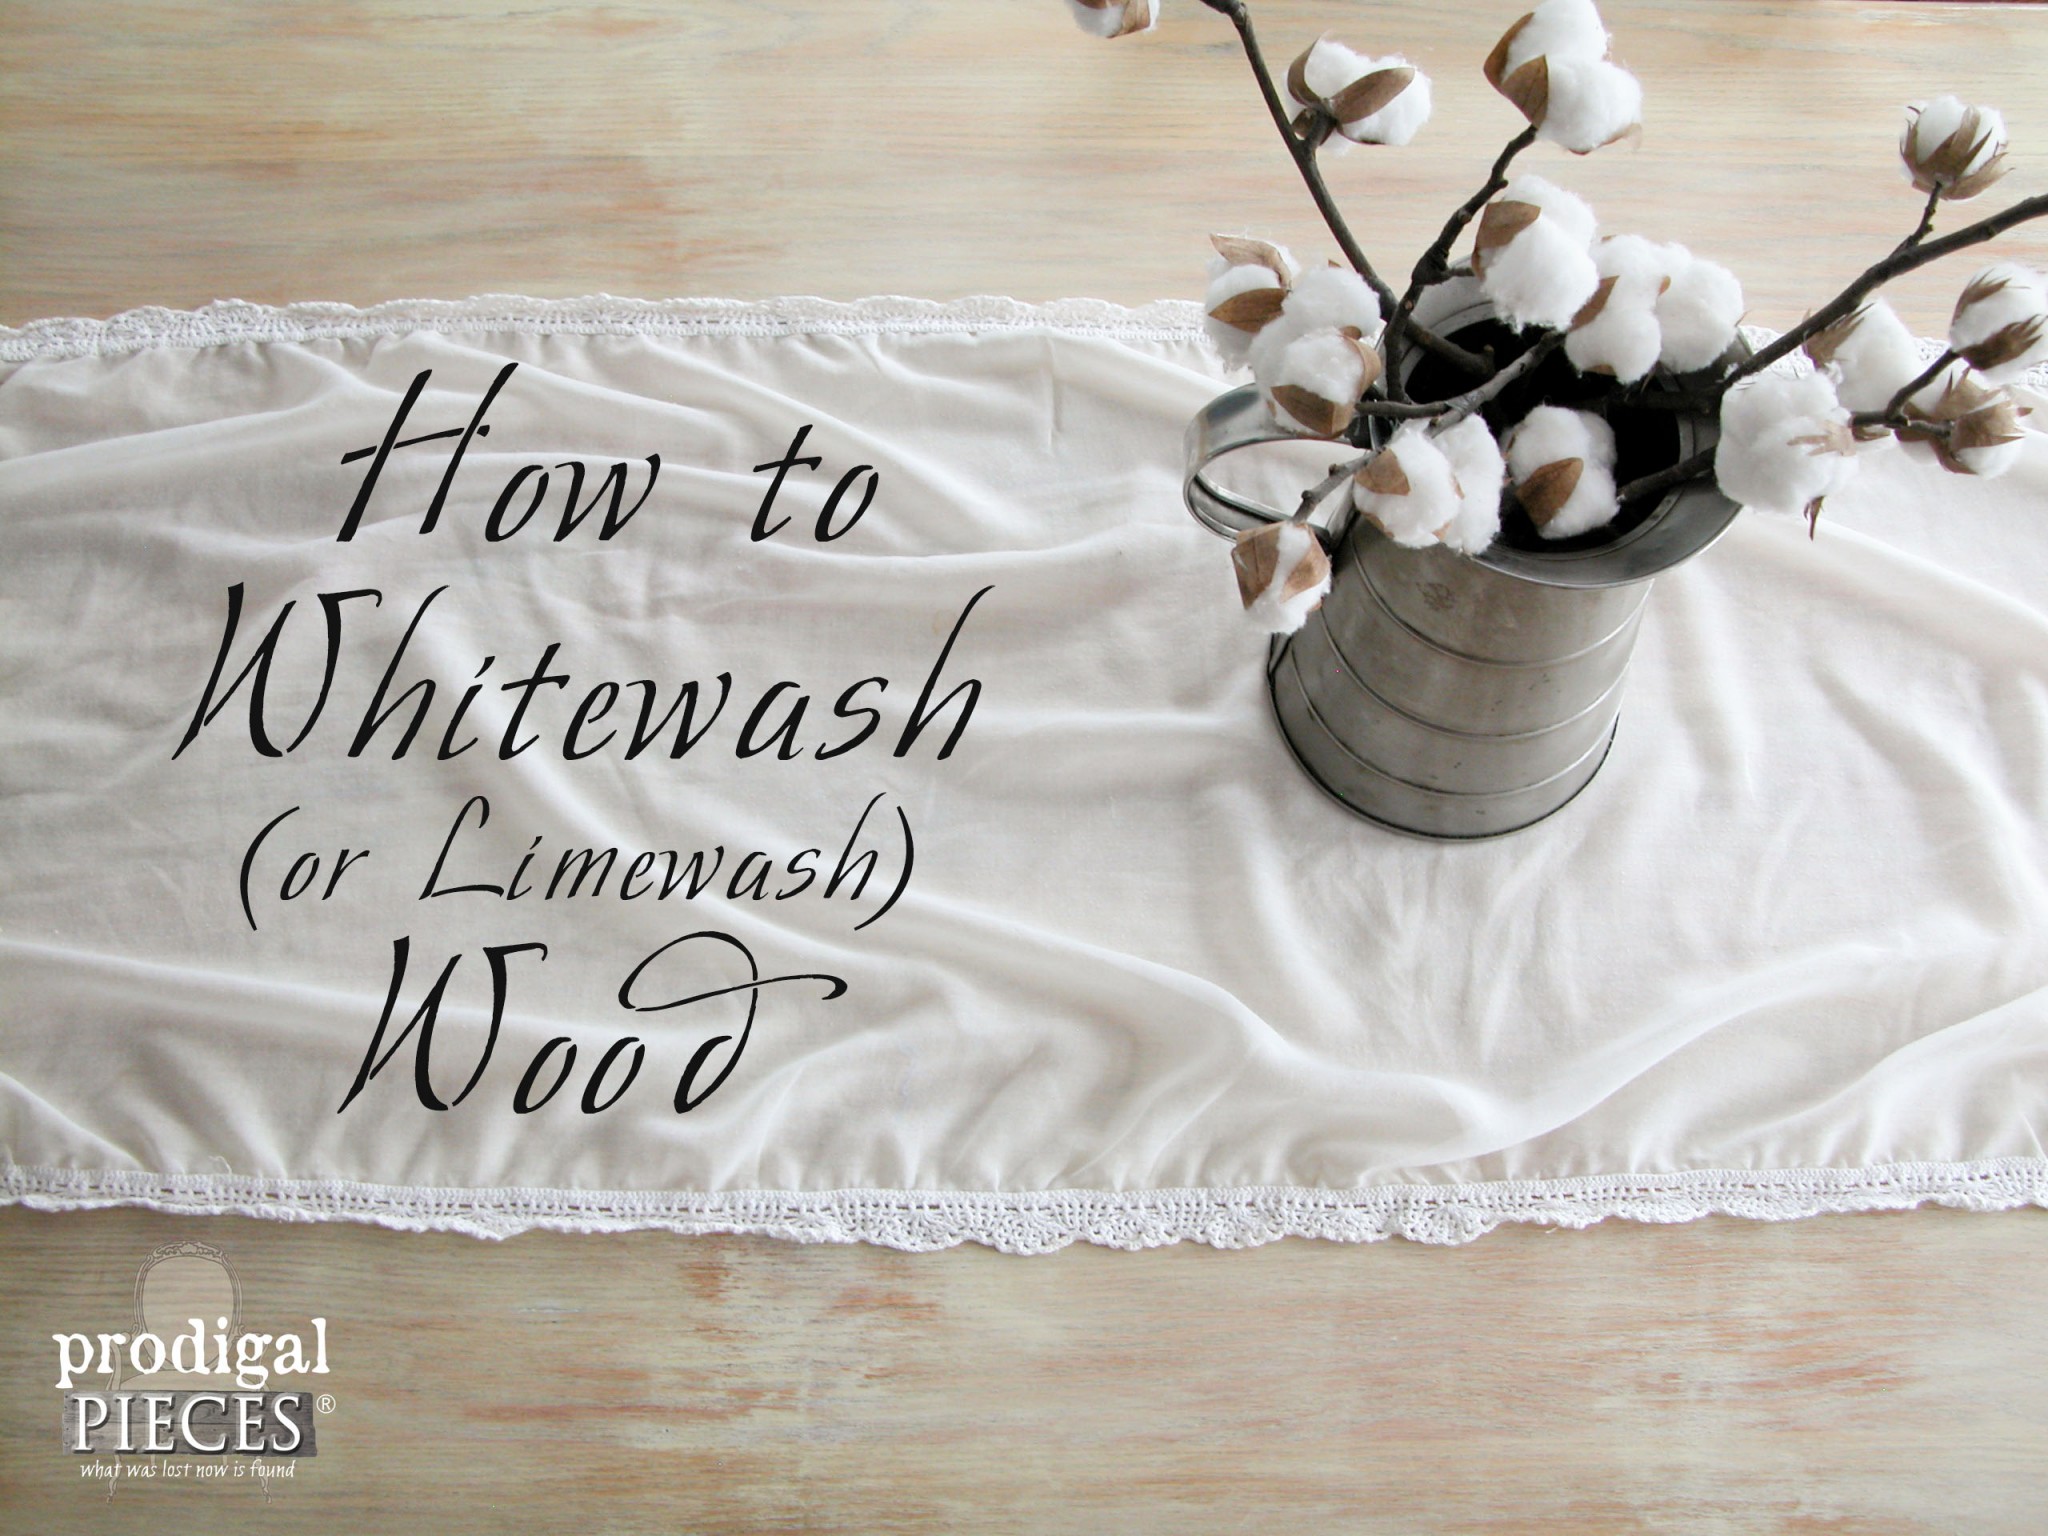 How to Whitewash (or Limewash) Wood by Prodigal Pieces | www.prodiglpieces.com